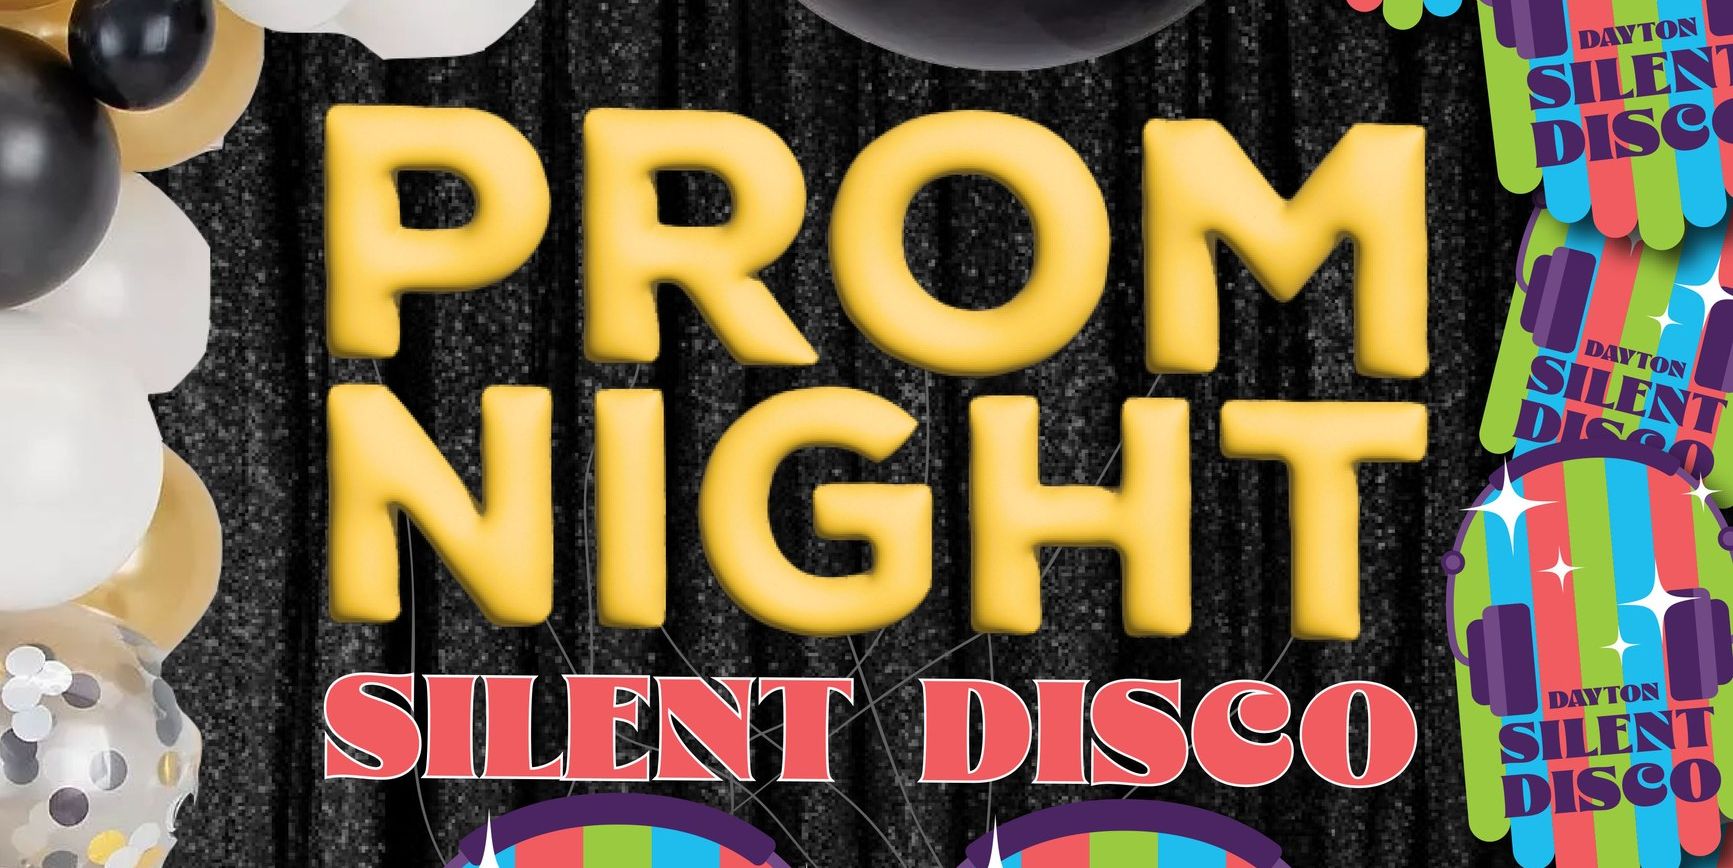 Dayton Silent Disco - March promotional image